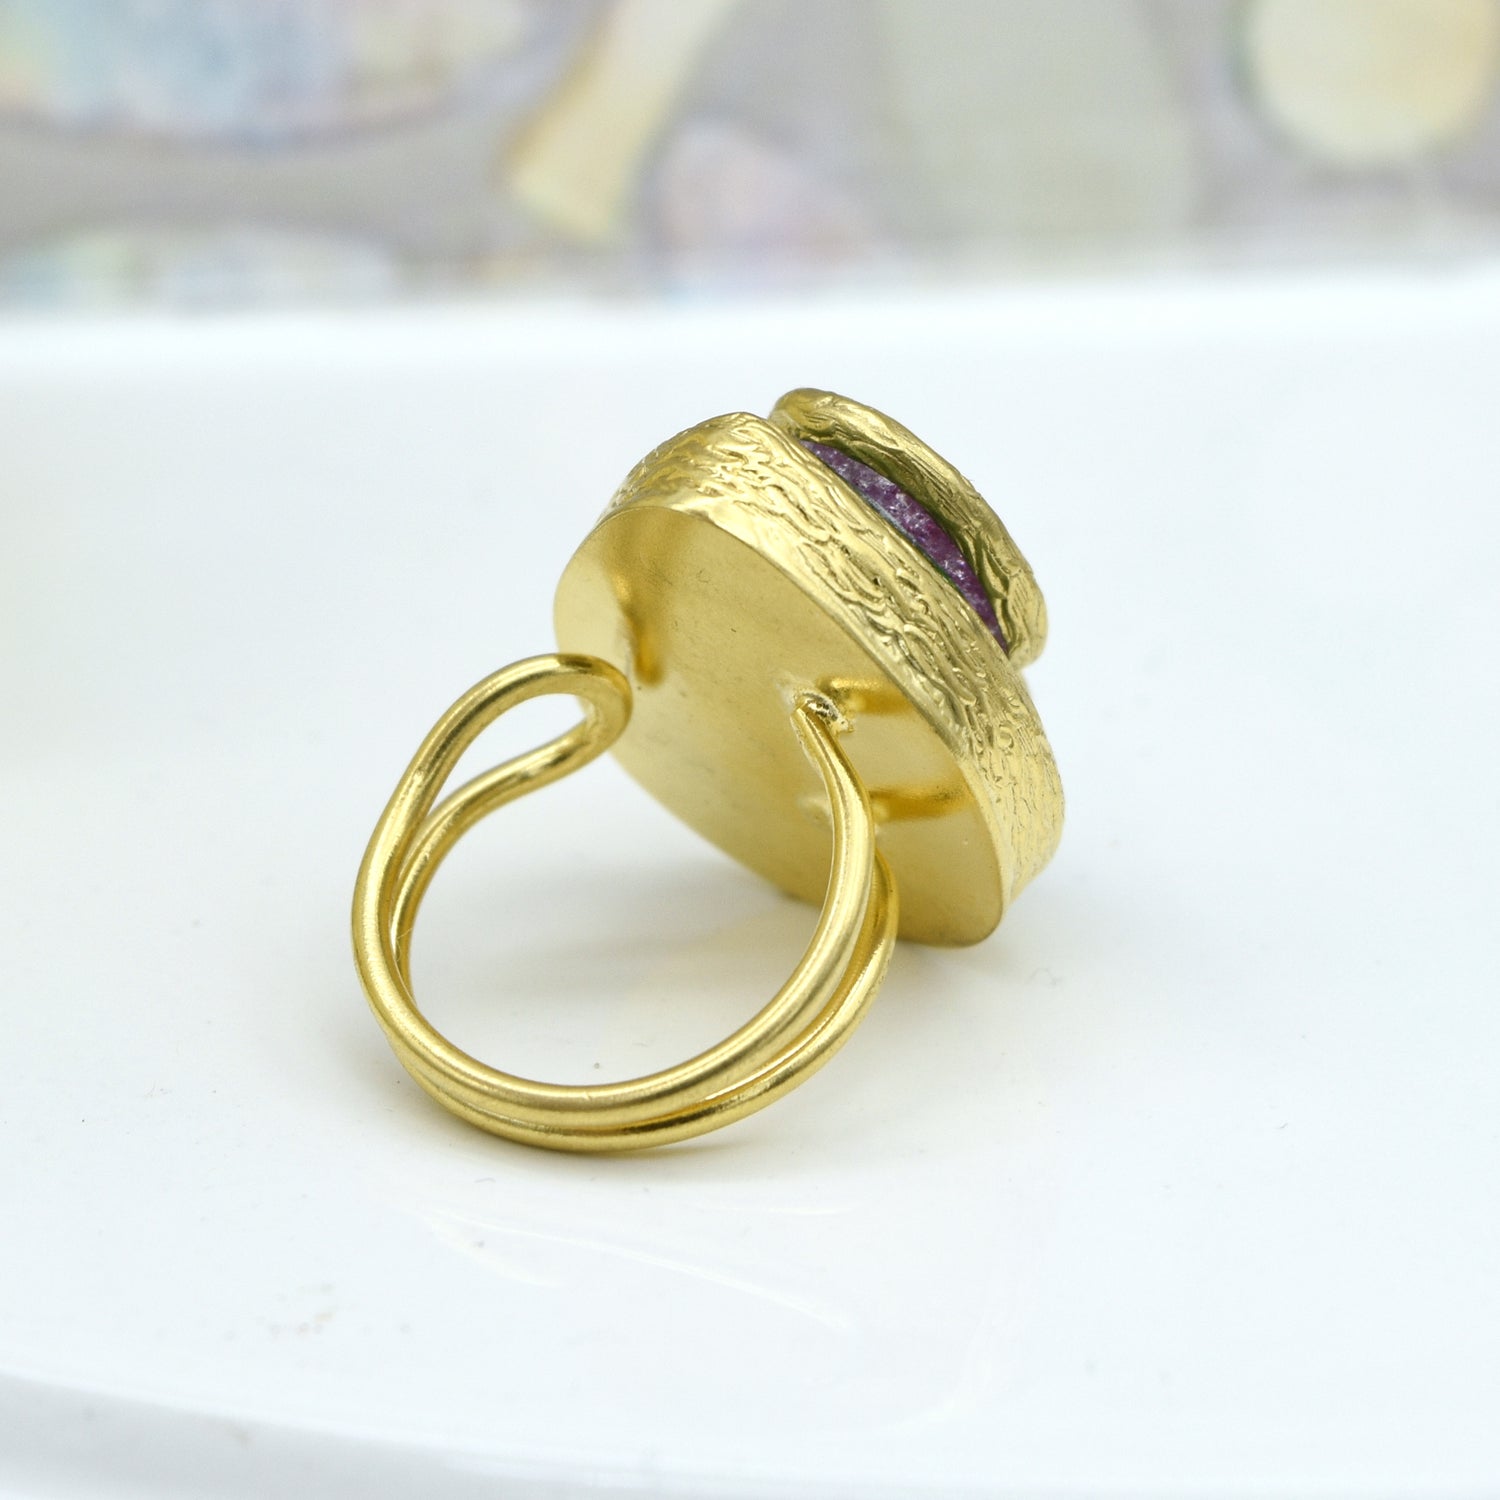 Aylas Crackled Zircon semi precious gemstone adjustable ring - 21ct Gold plated brass